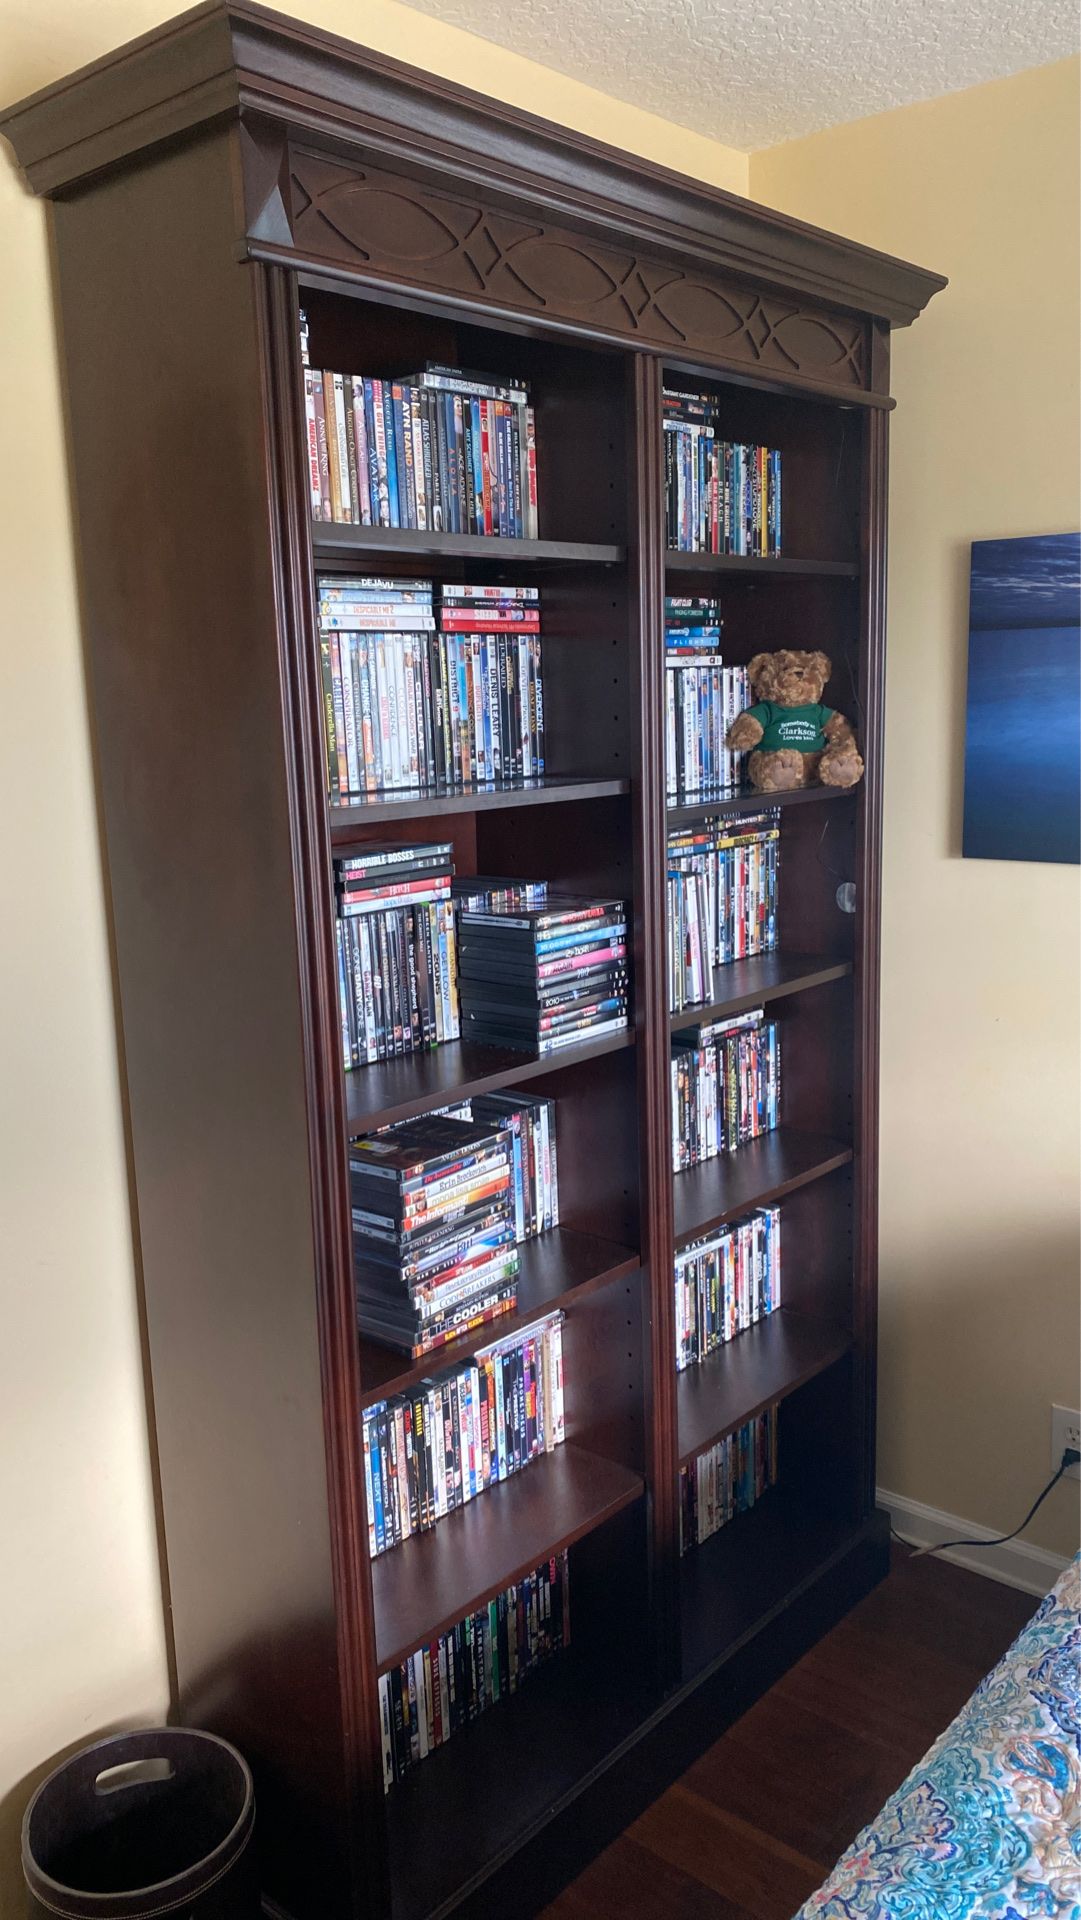 Two matching Bookshelves